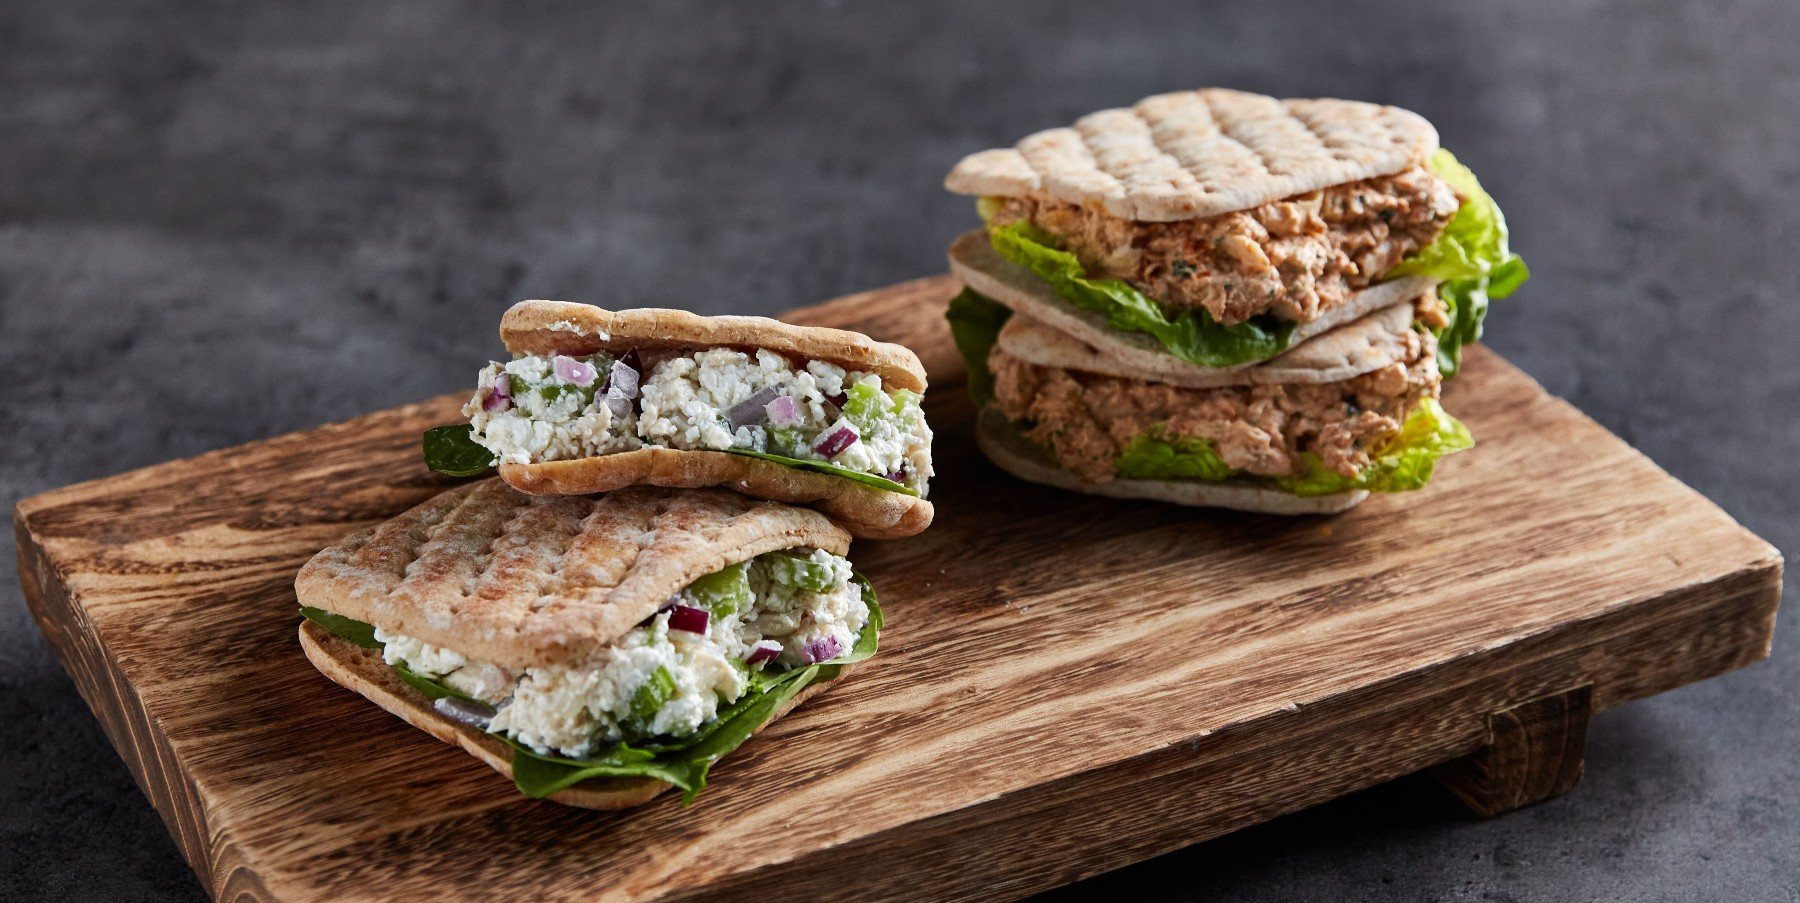 Protein-Packed Sandwiches 2 Ways